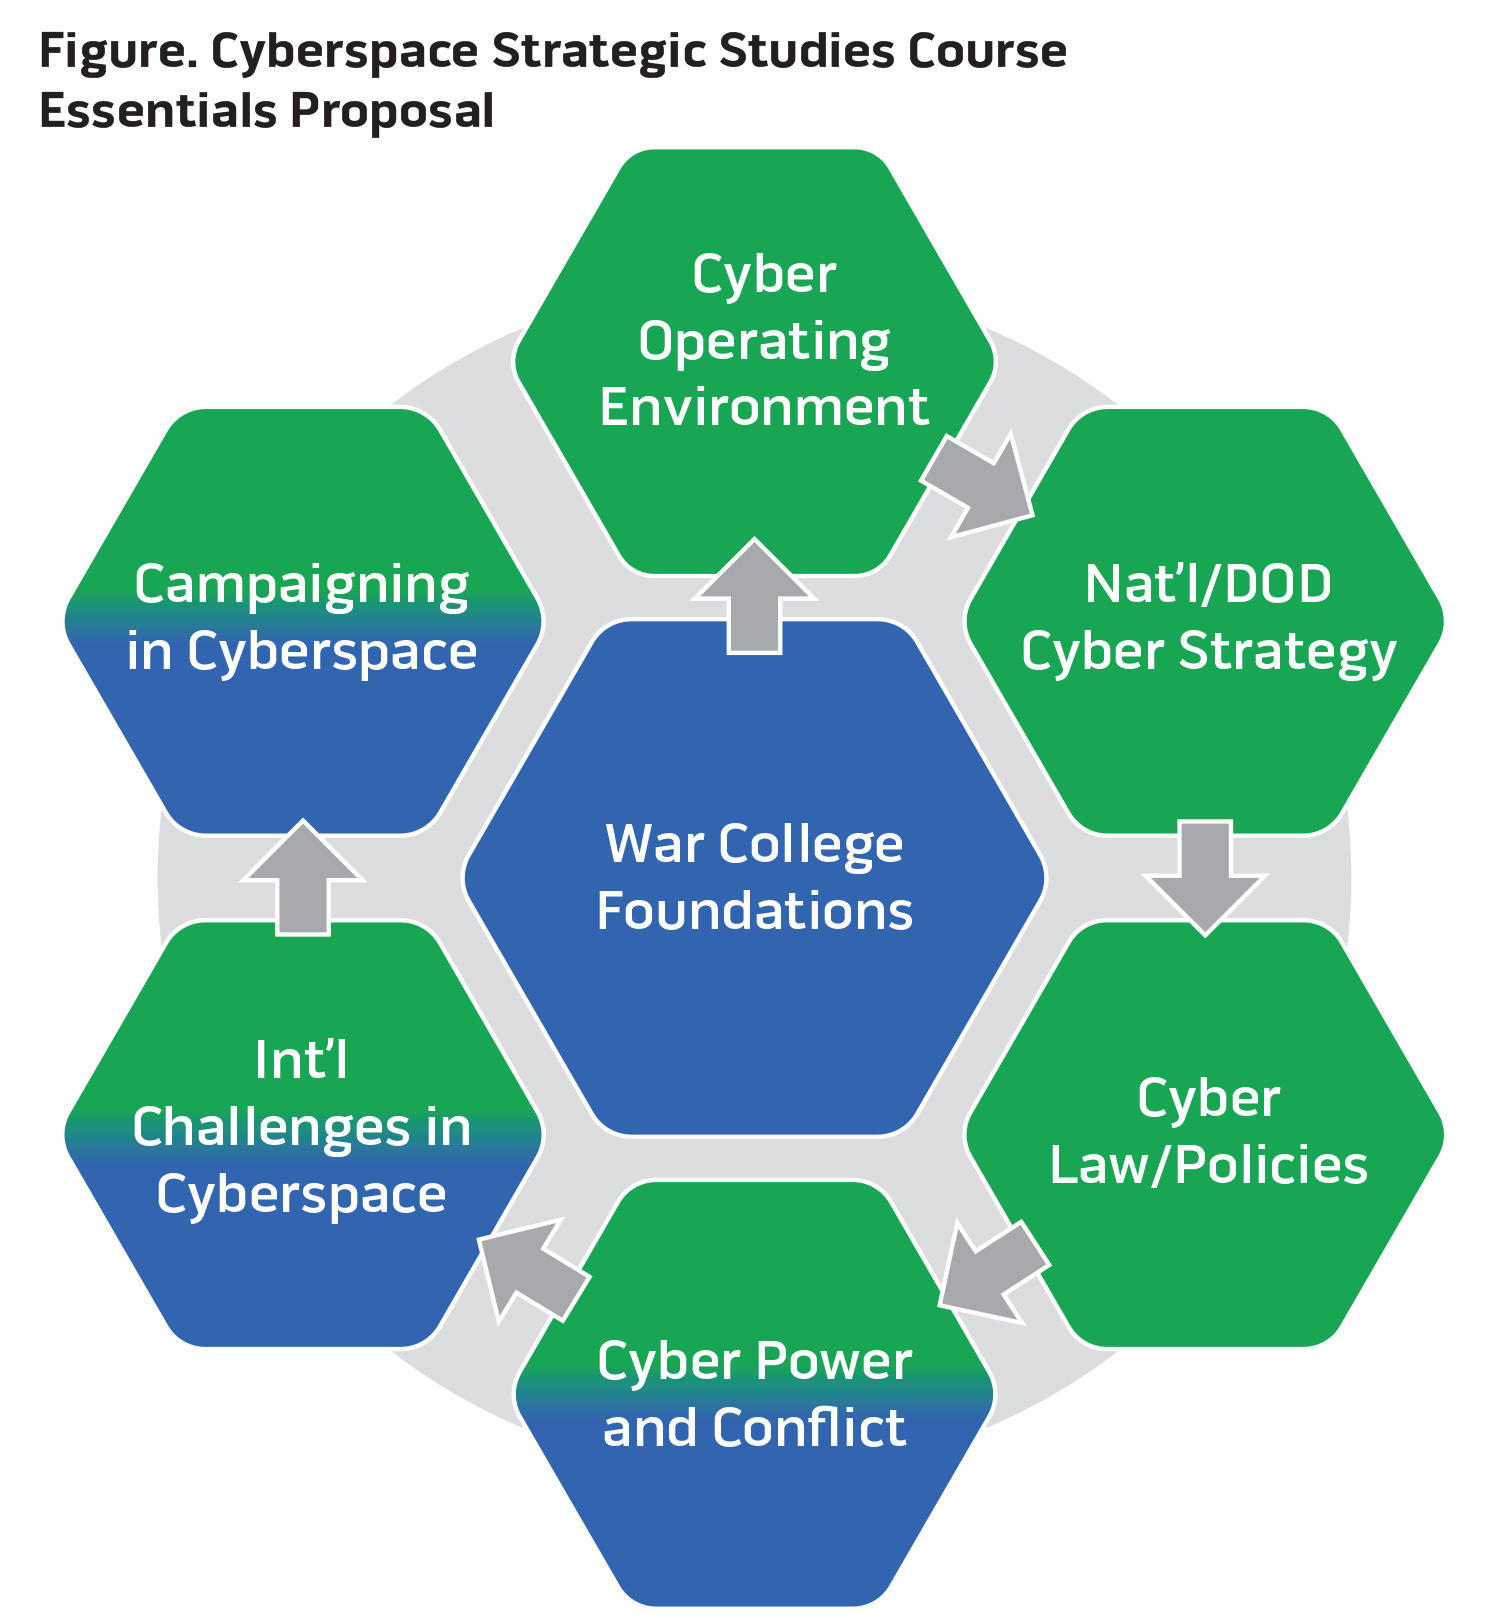 Figure. Cyberspace Strategic Studies Course Essentials Proposal